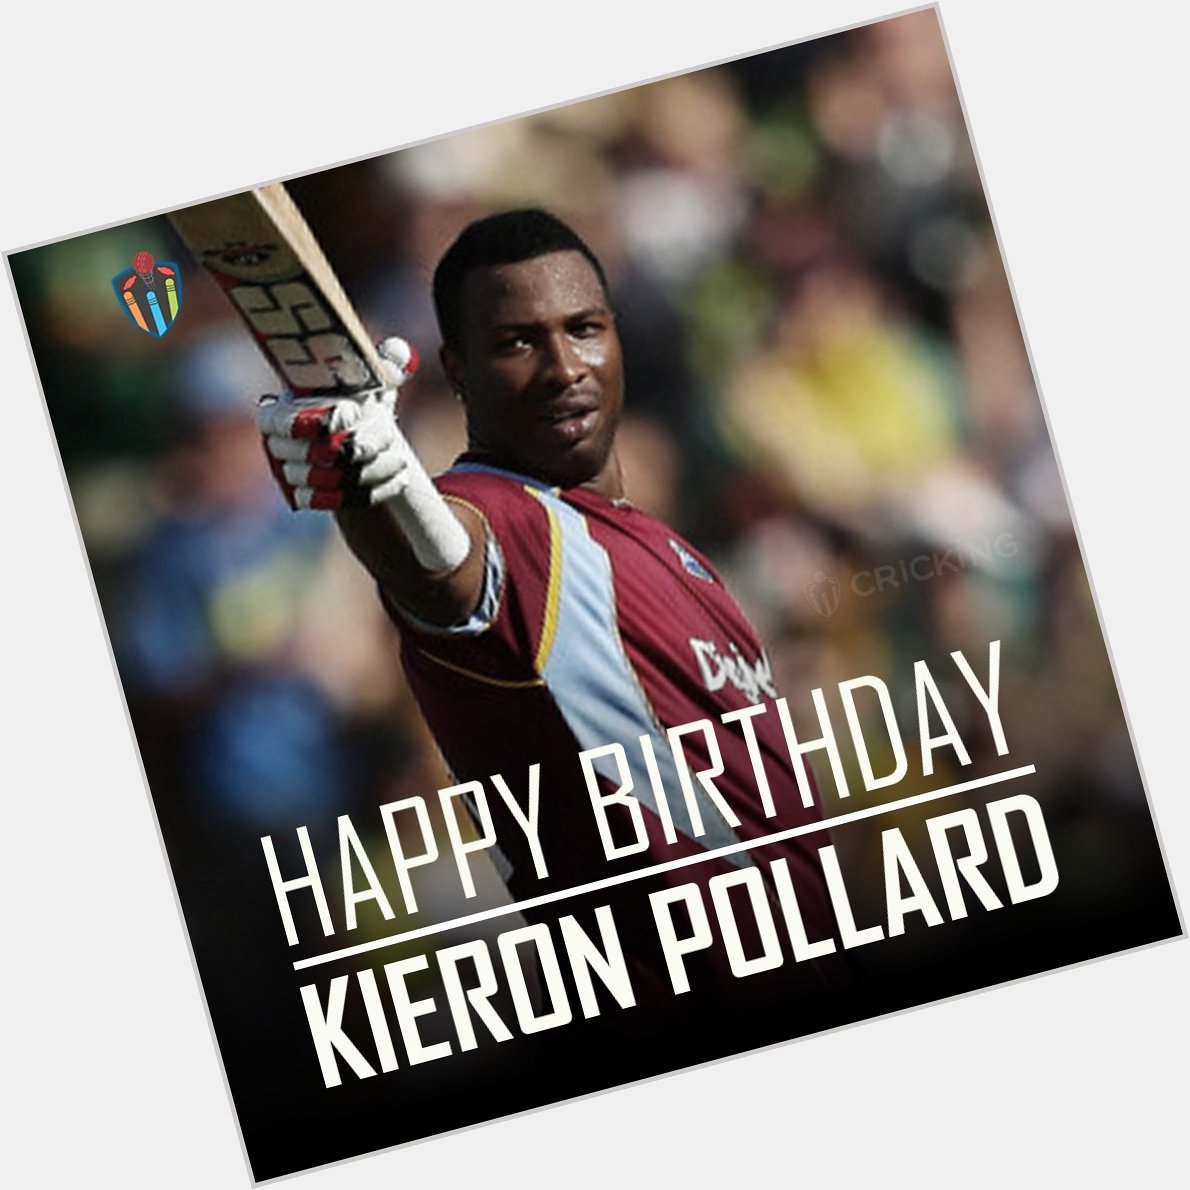 Happy Birthday Kieron Pollard. The West Indies cricketer turns 30 today. 